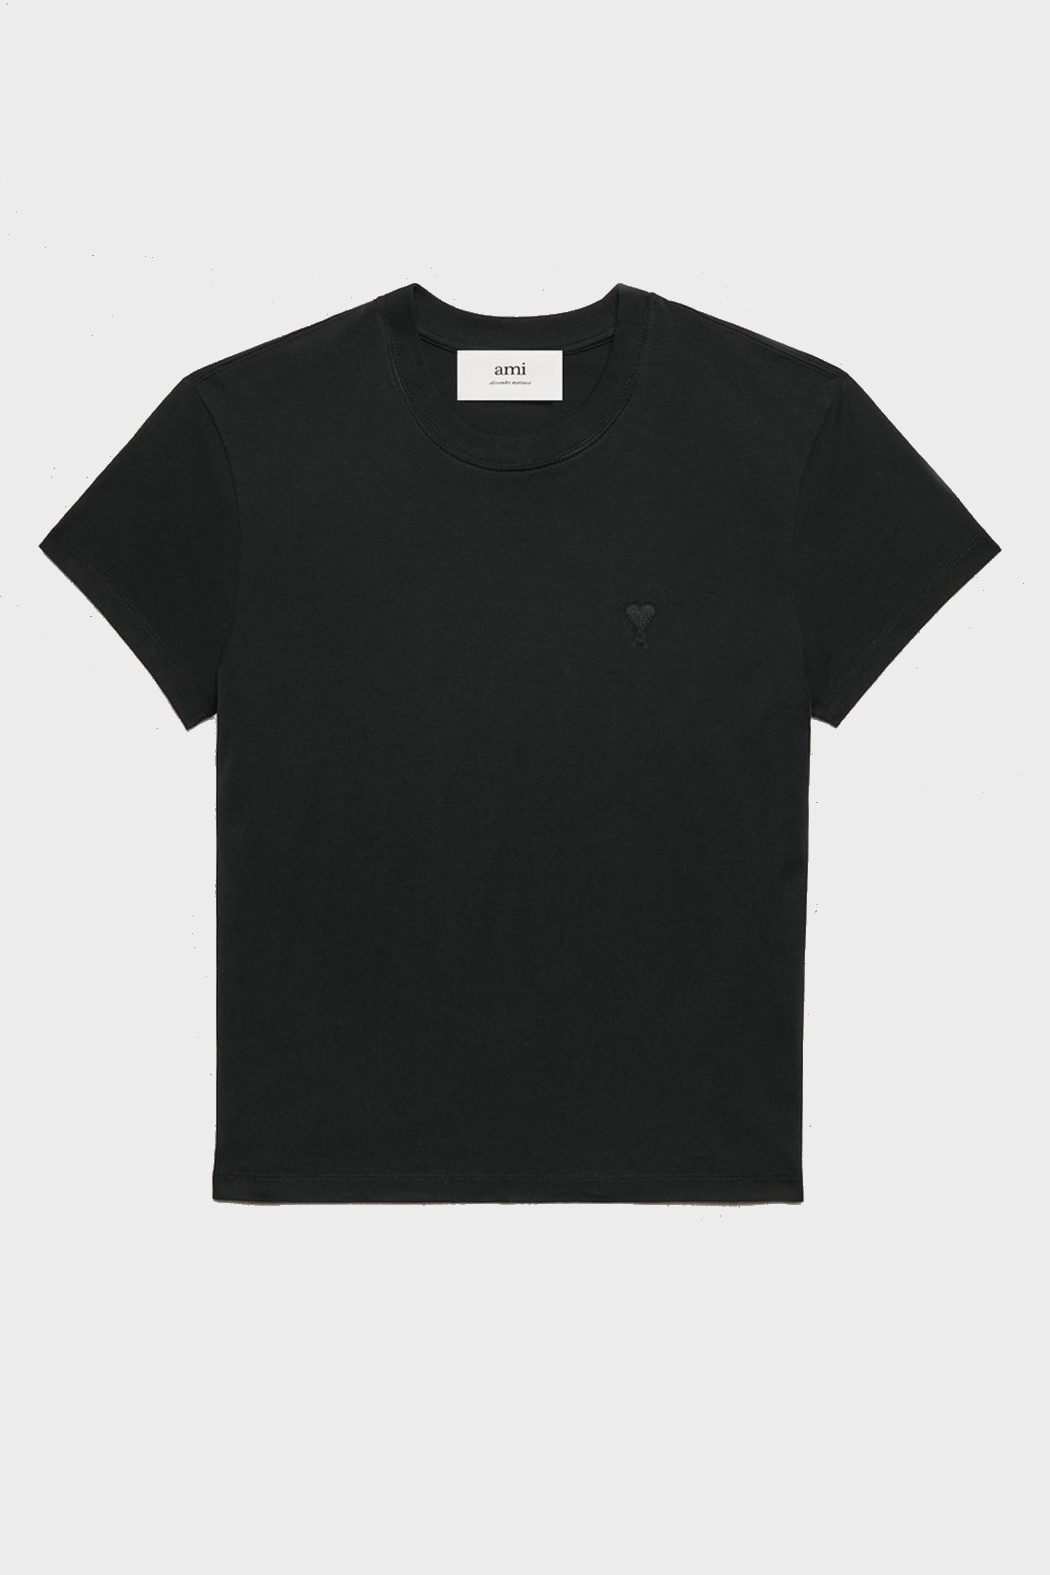 AMI PARIS de Coeur T-Shirt in Black S